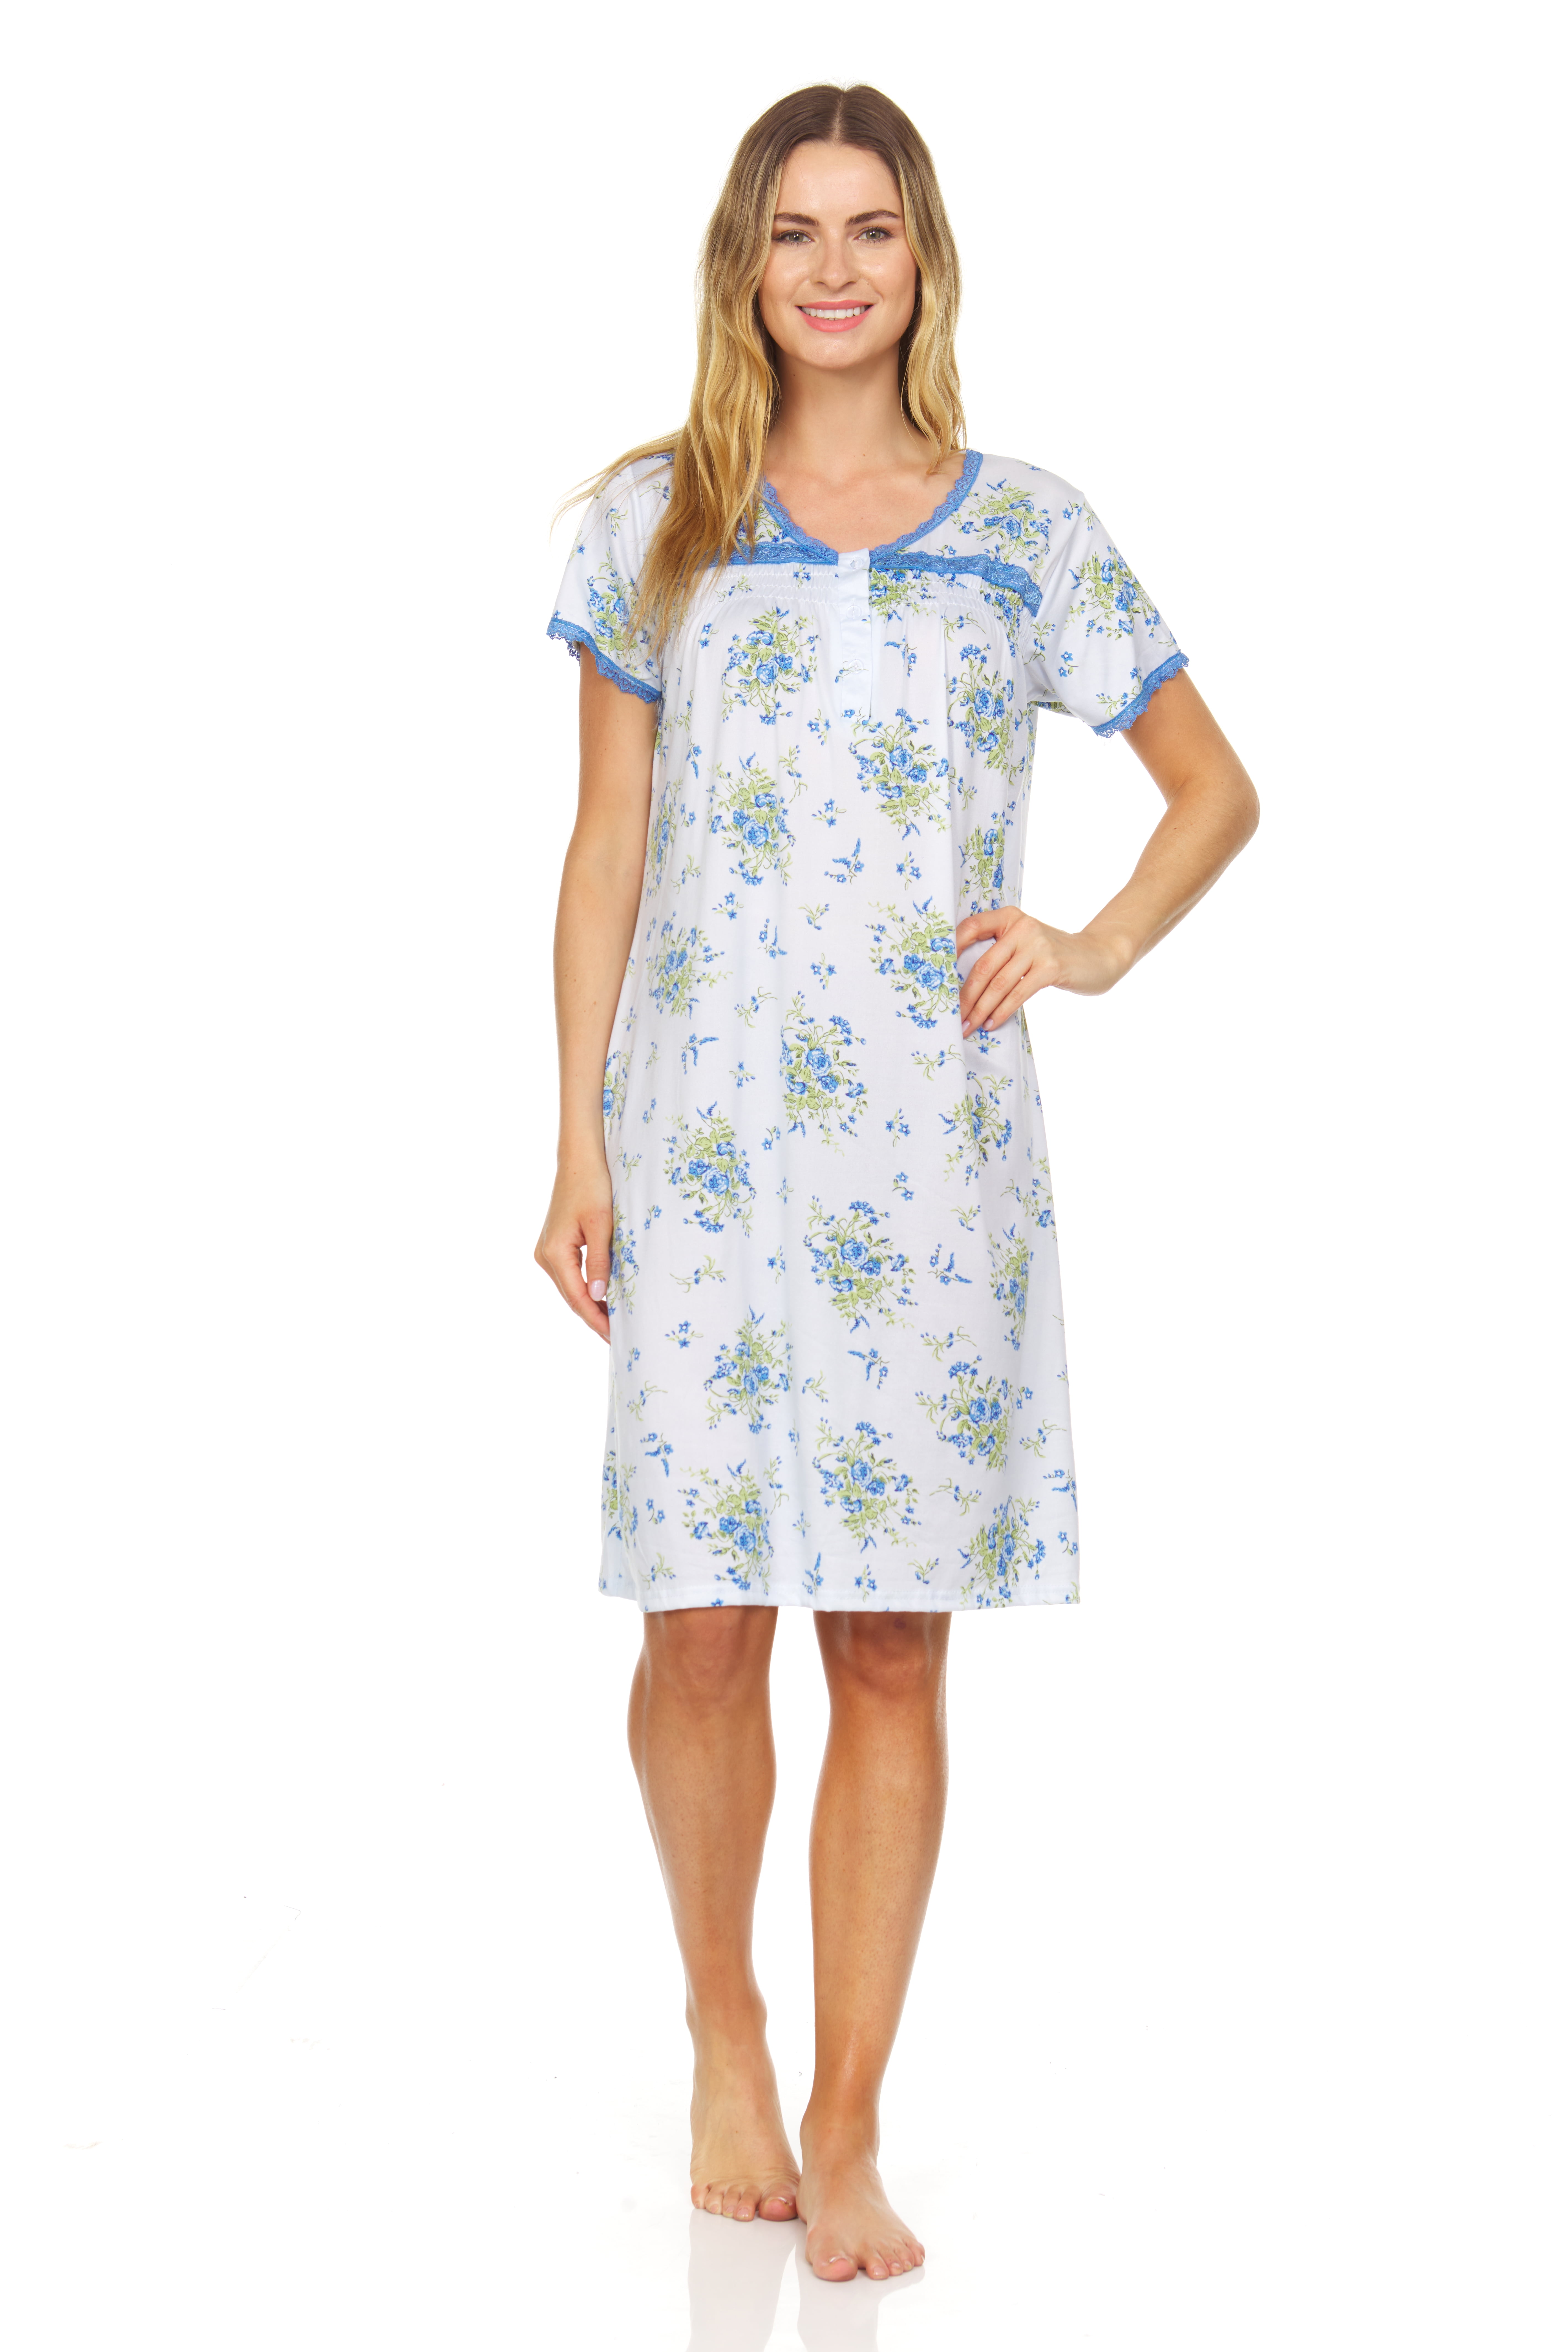 820 Women Short Sleeve Nightgown Sleepwear Nightshirt Pajamas Blue L